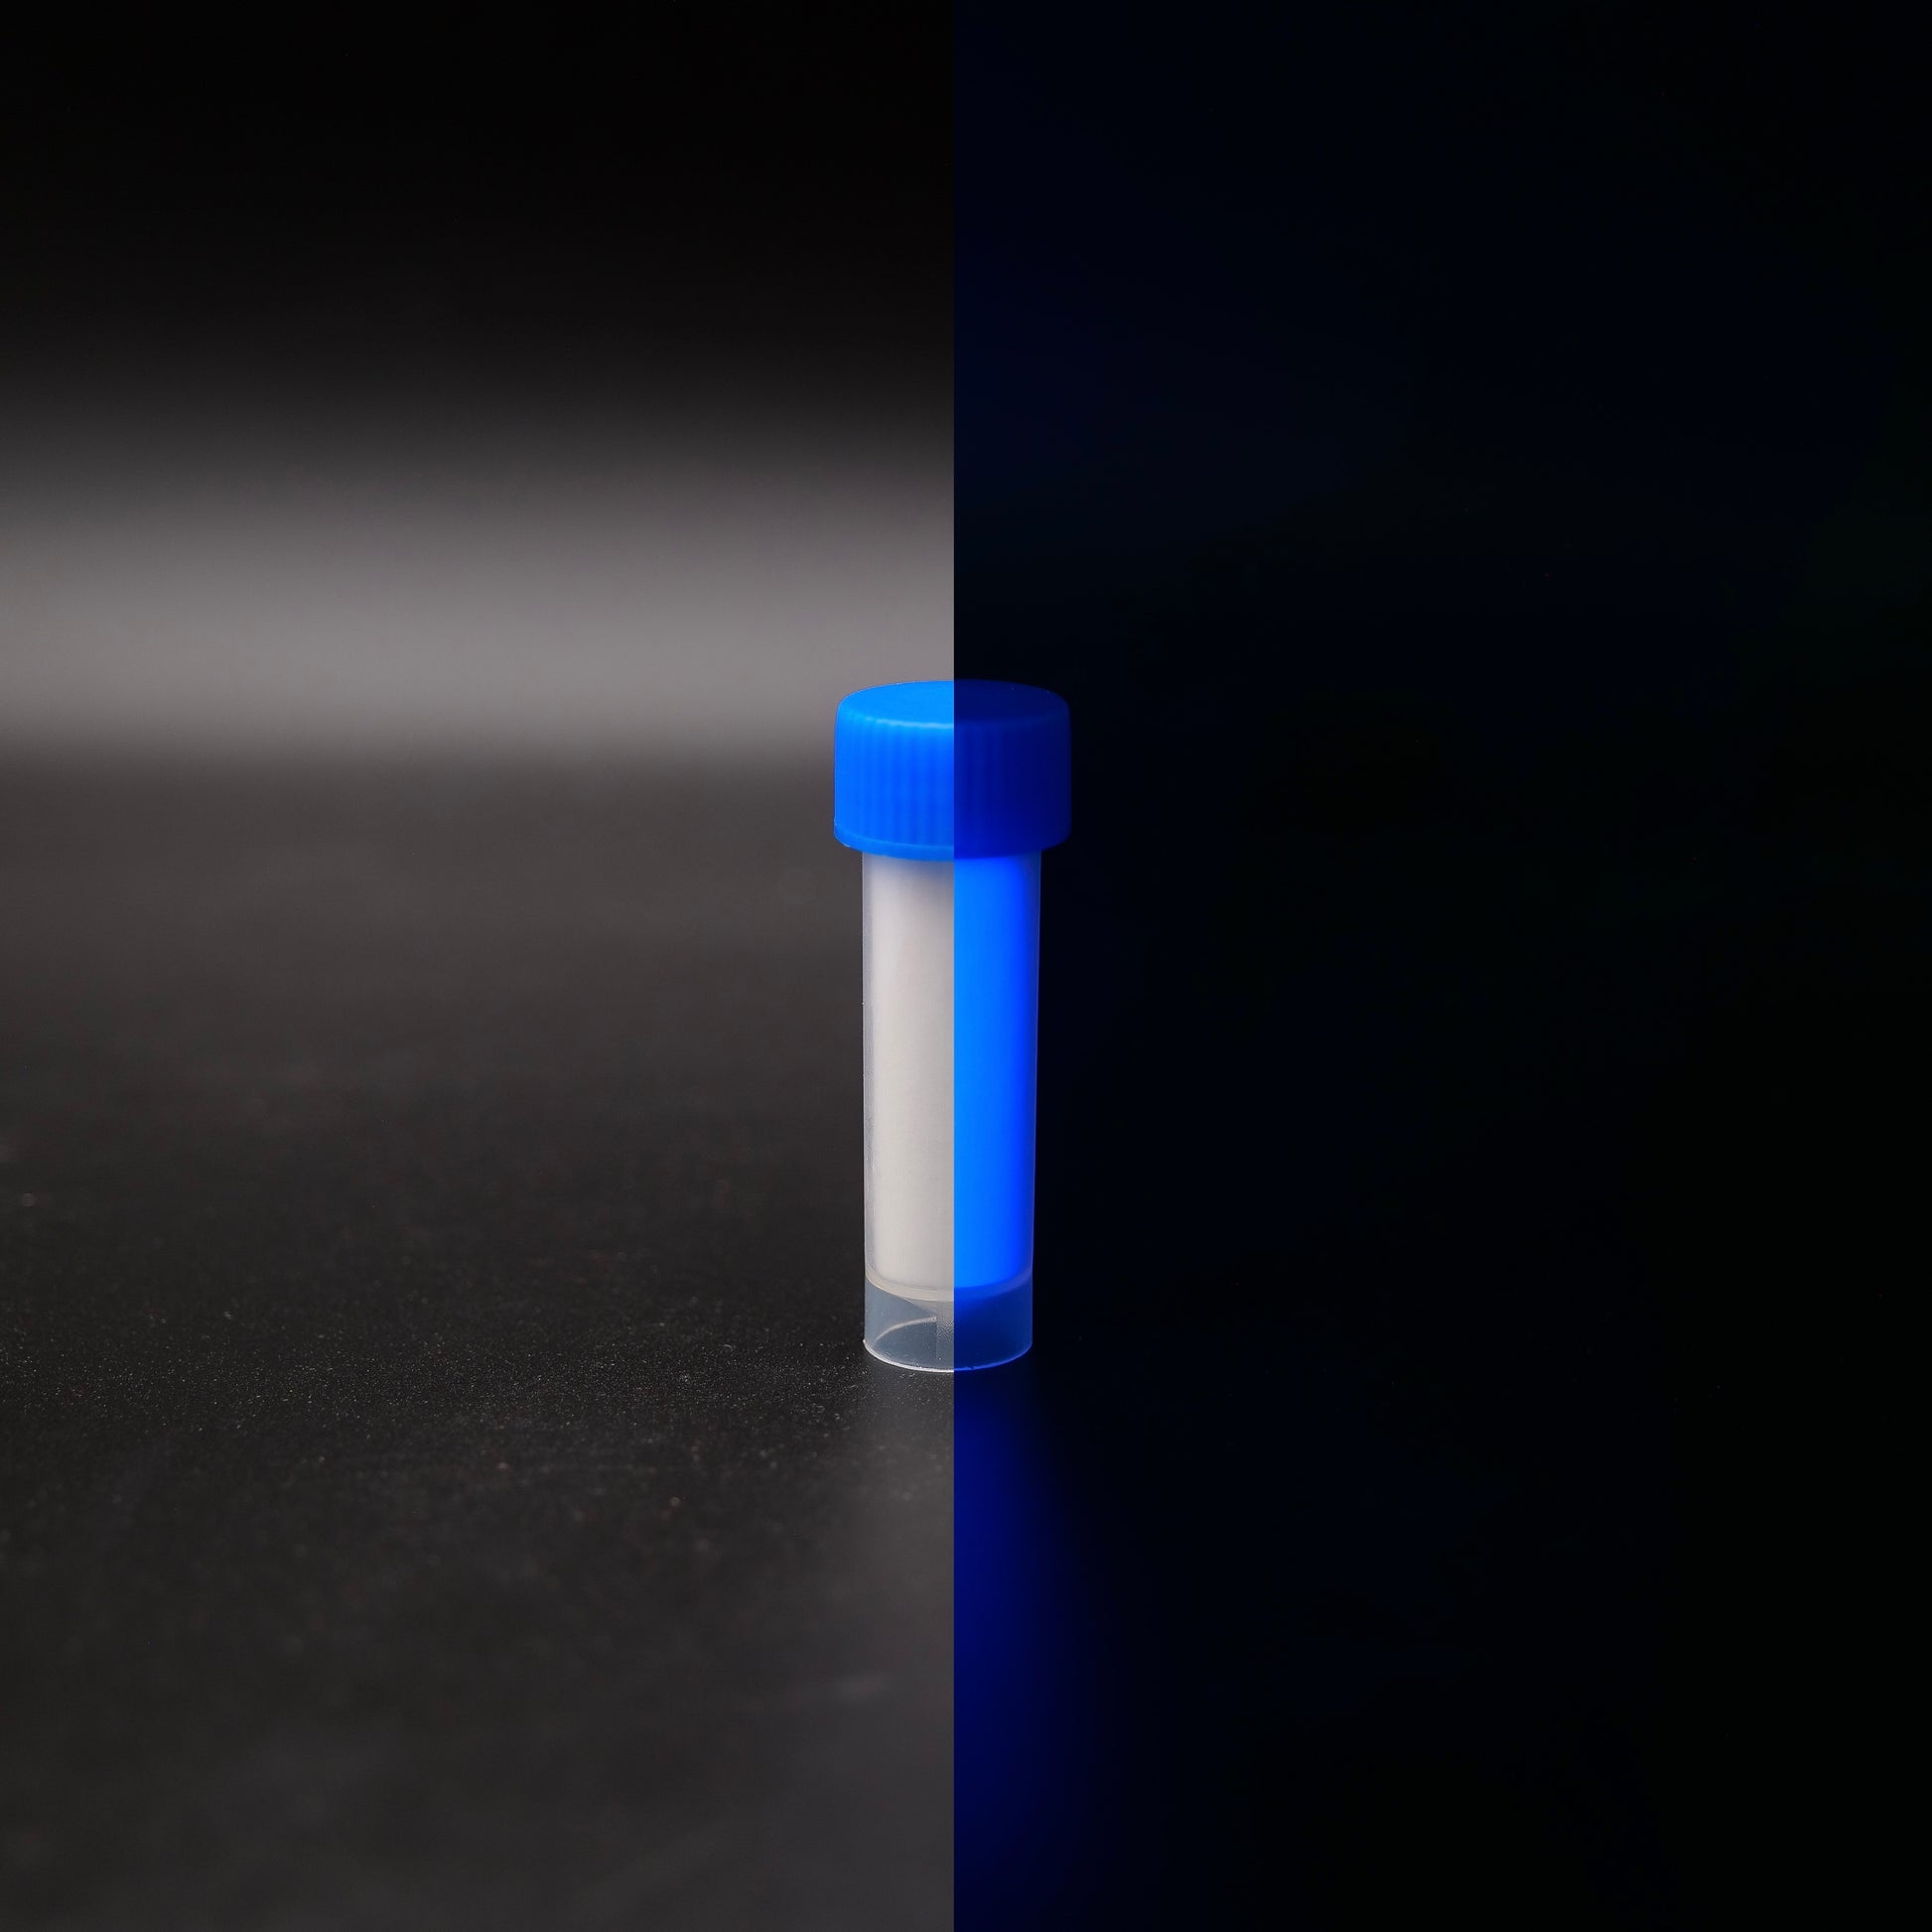 Blue Glow in The Dark Pigment Powder - 1 Kilogram